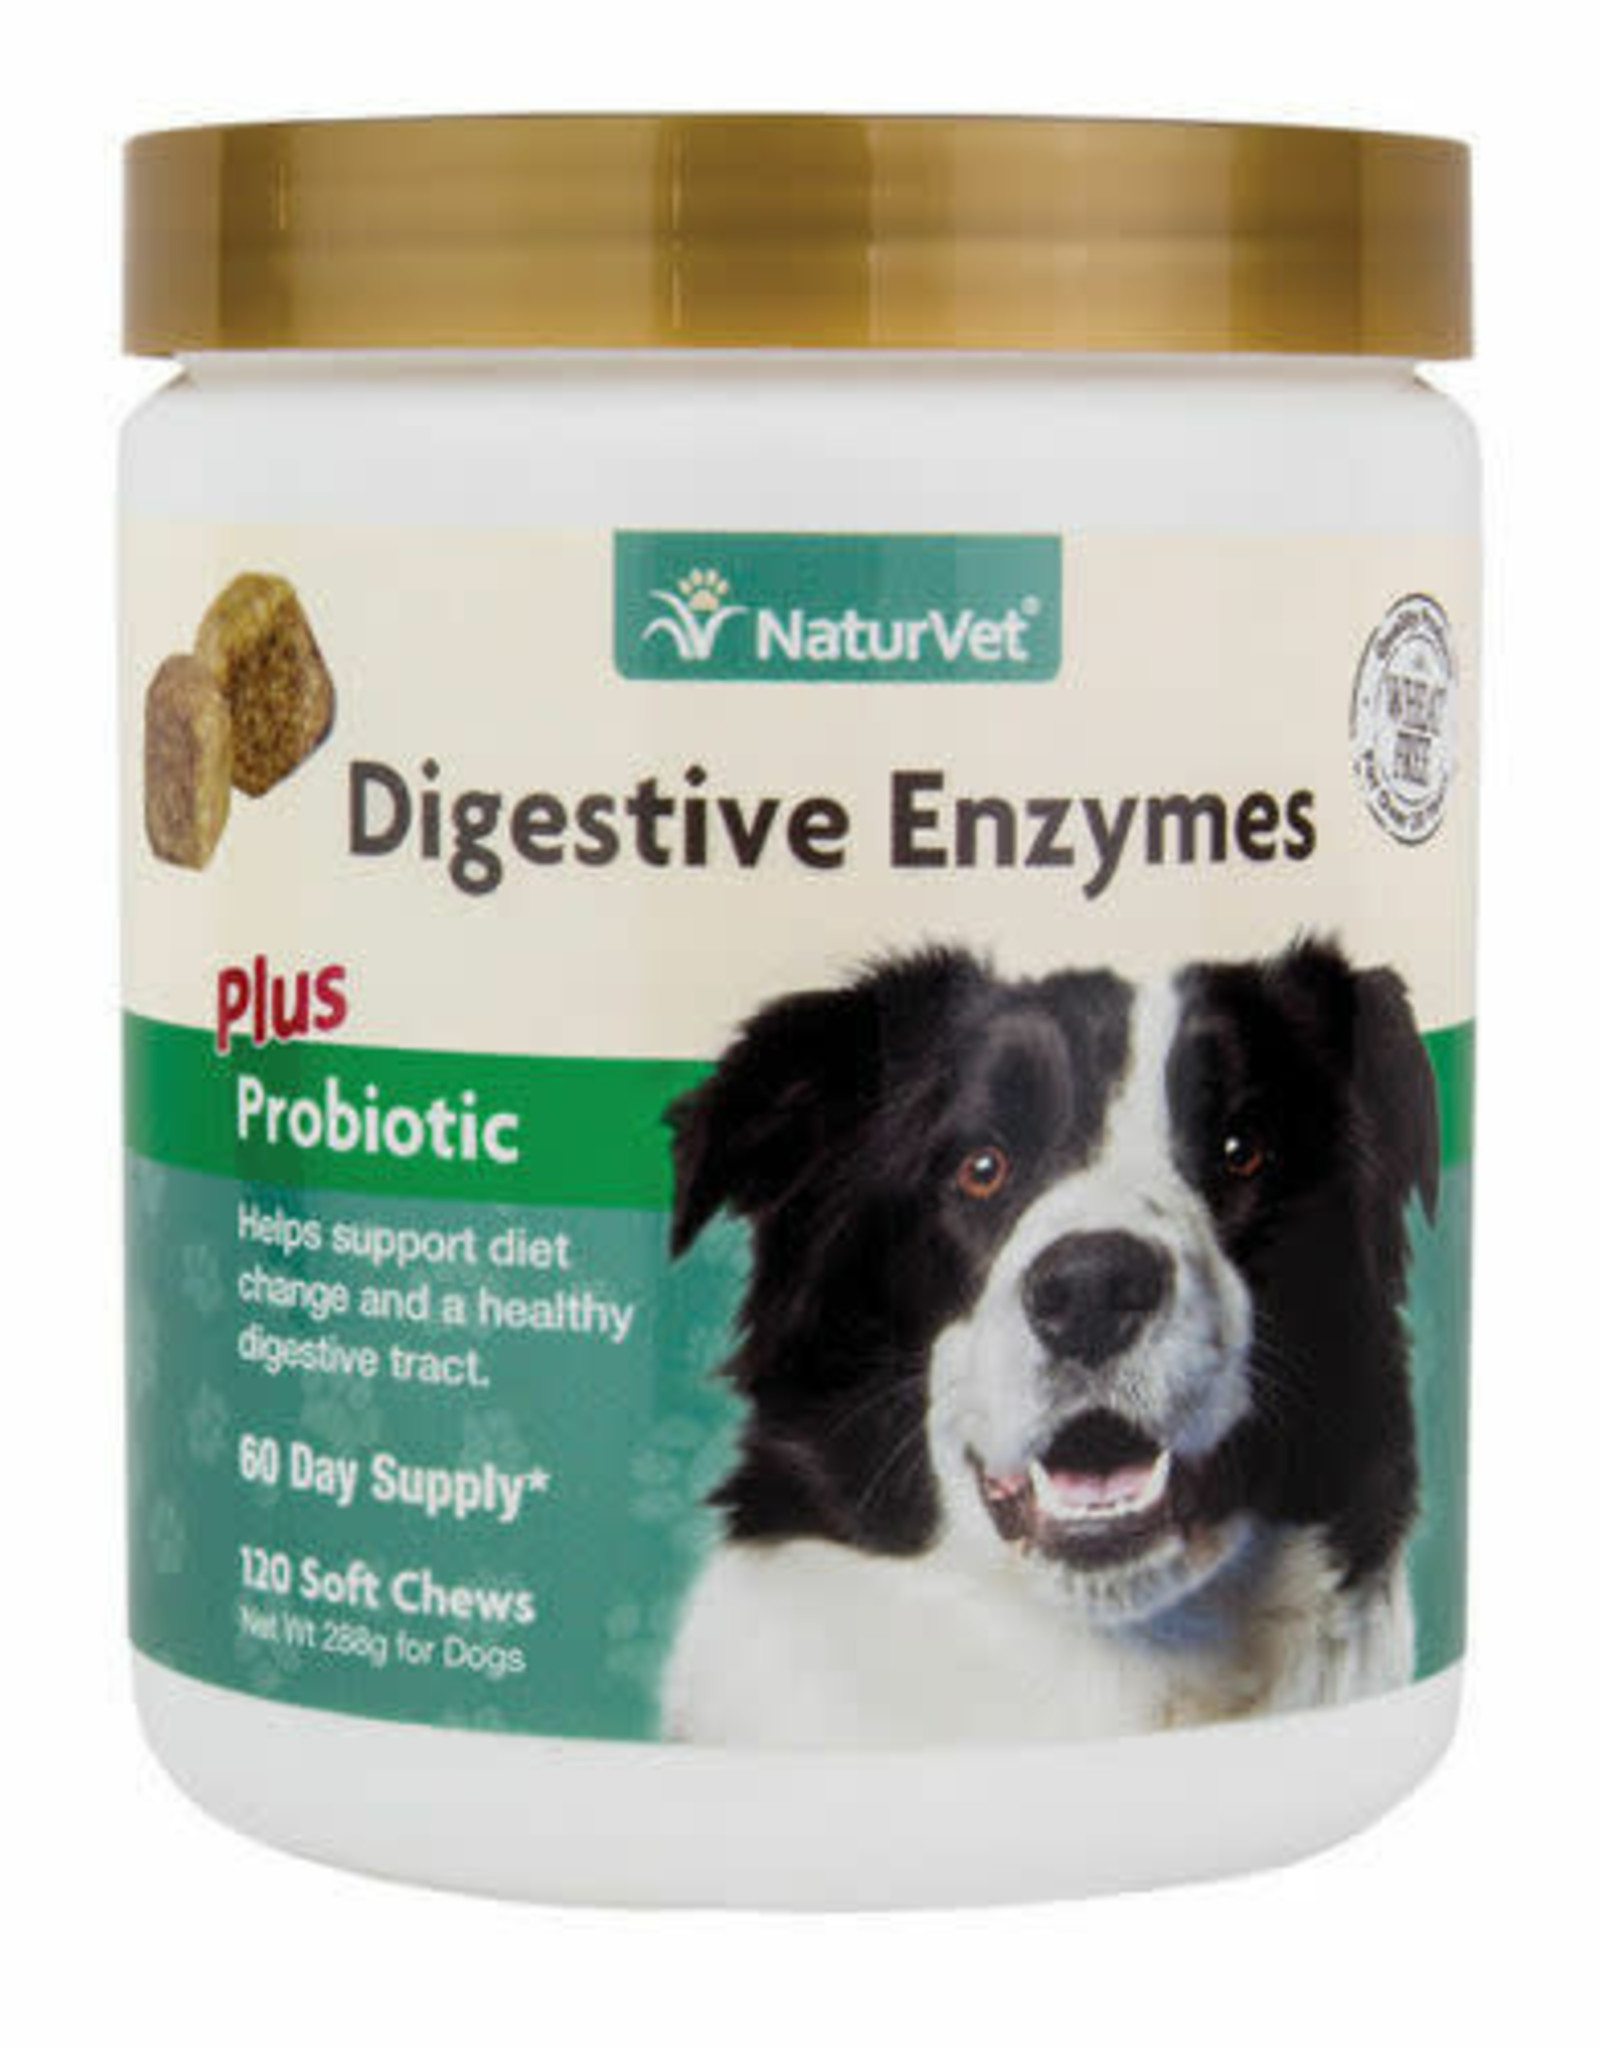 NaturVet NaturVet Digestive Enzymes Plus Probiotic for Dogs 120 Soft Chews